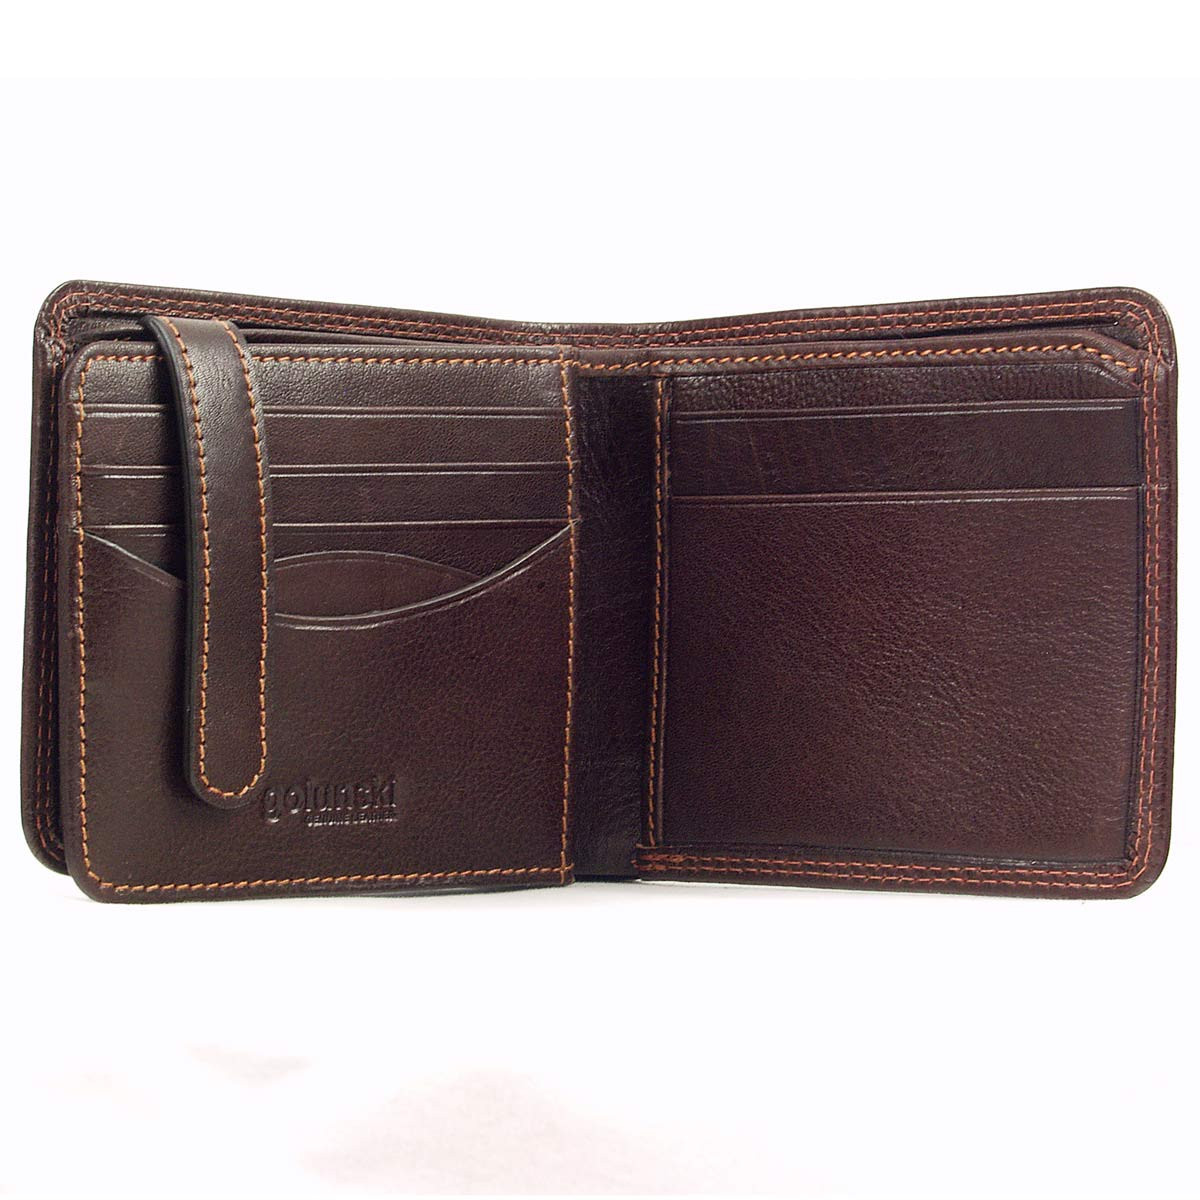 Golunski Oak Leather Men's Wallet 7-700 Brown